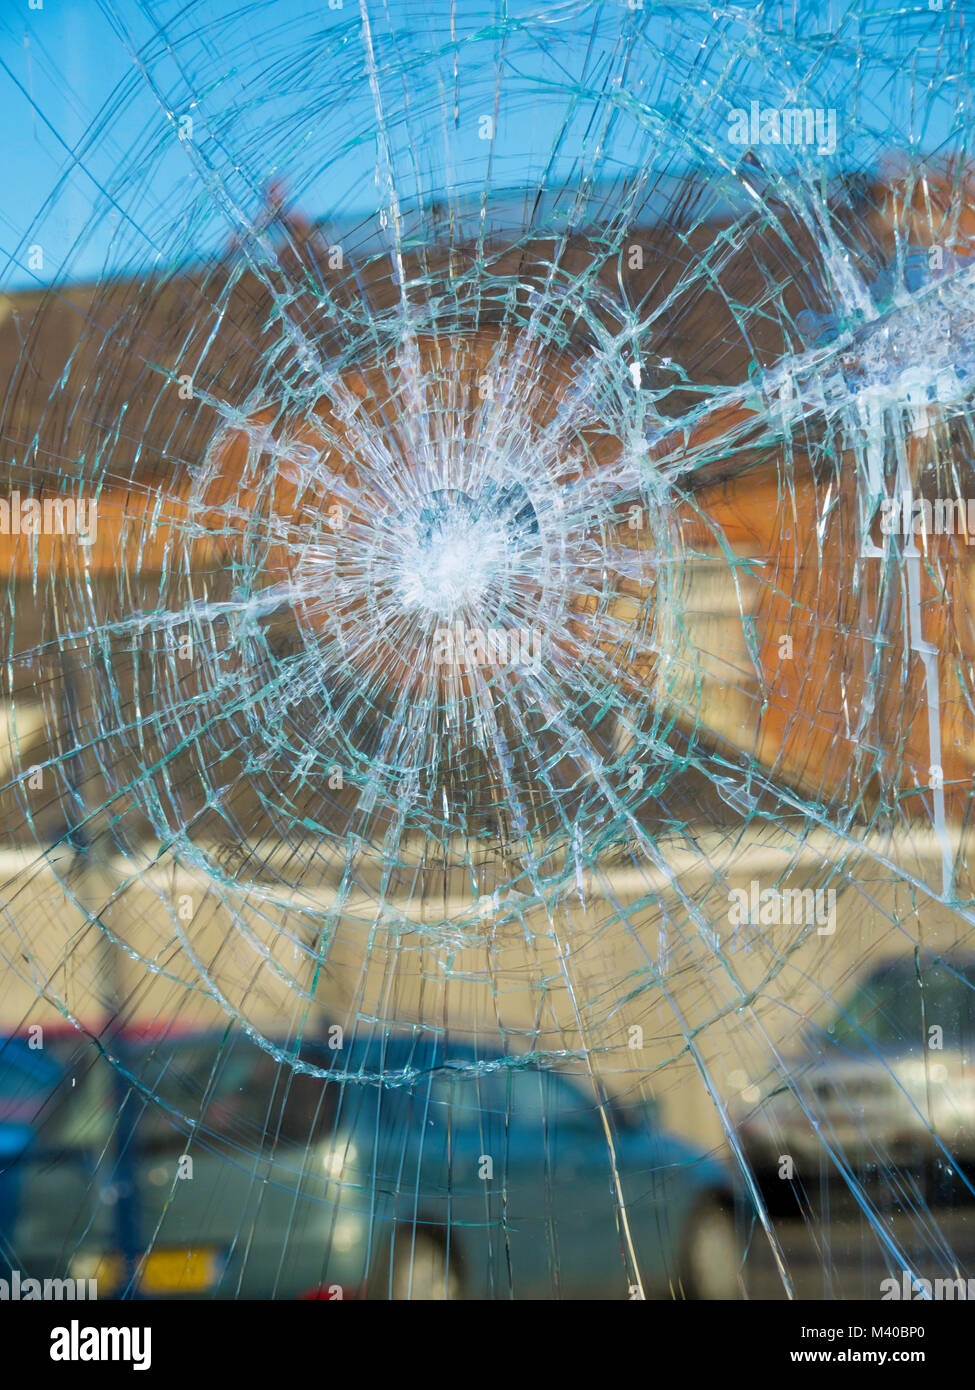 Criminal damage a shop window broken by vandals Stock Photo